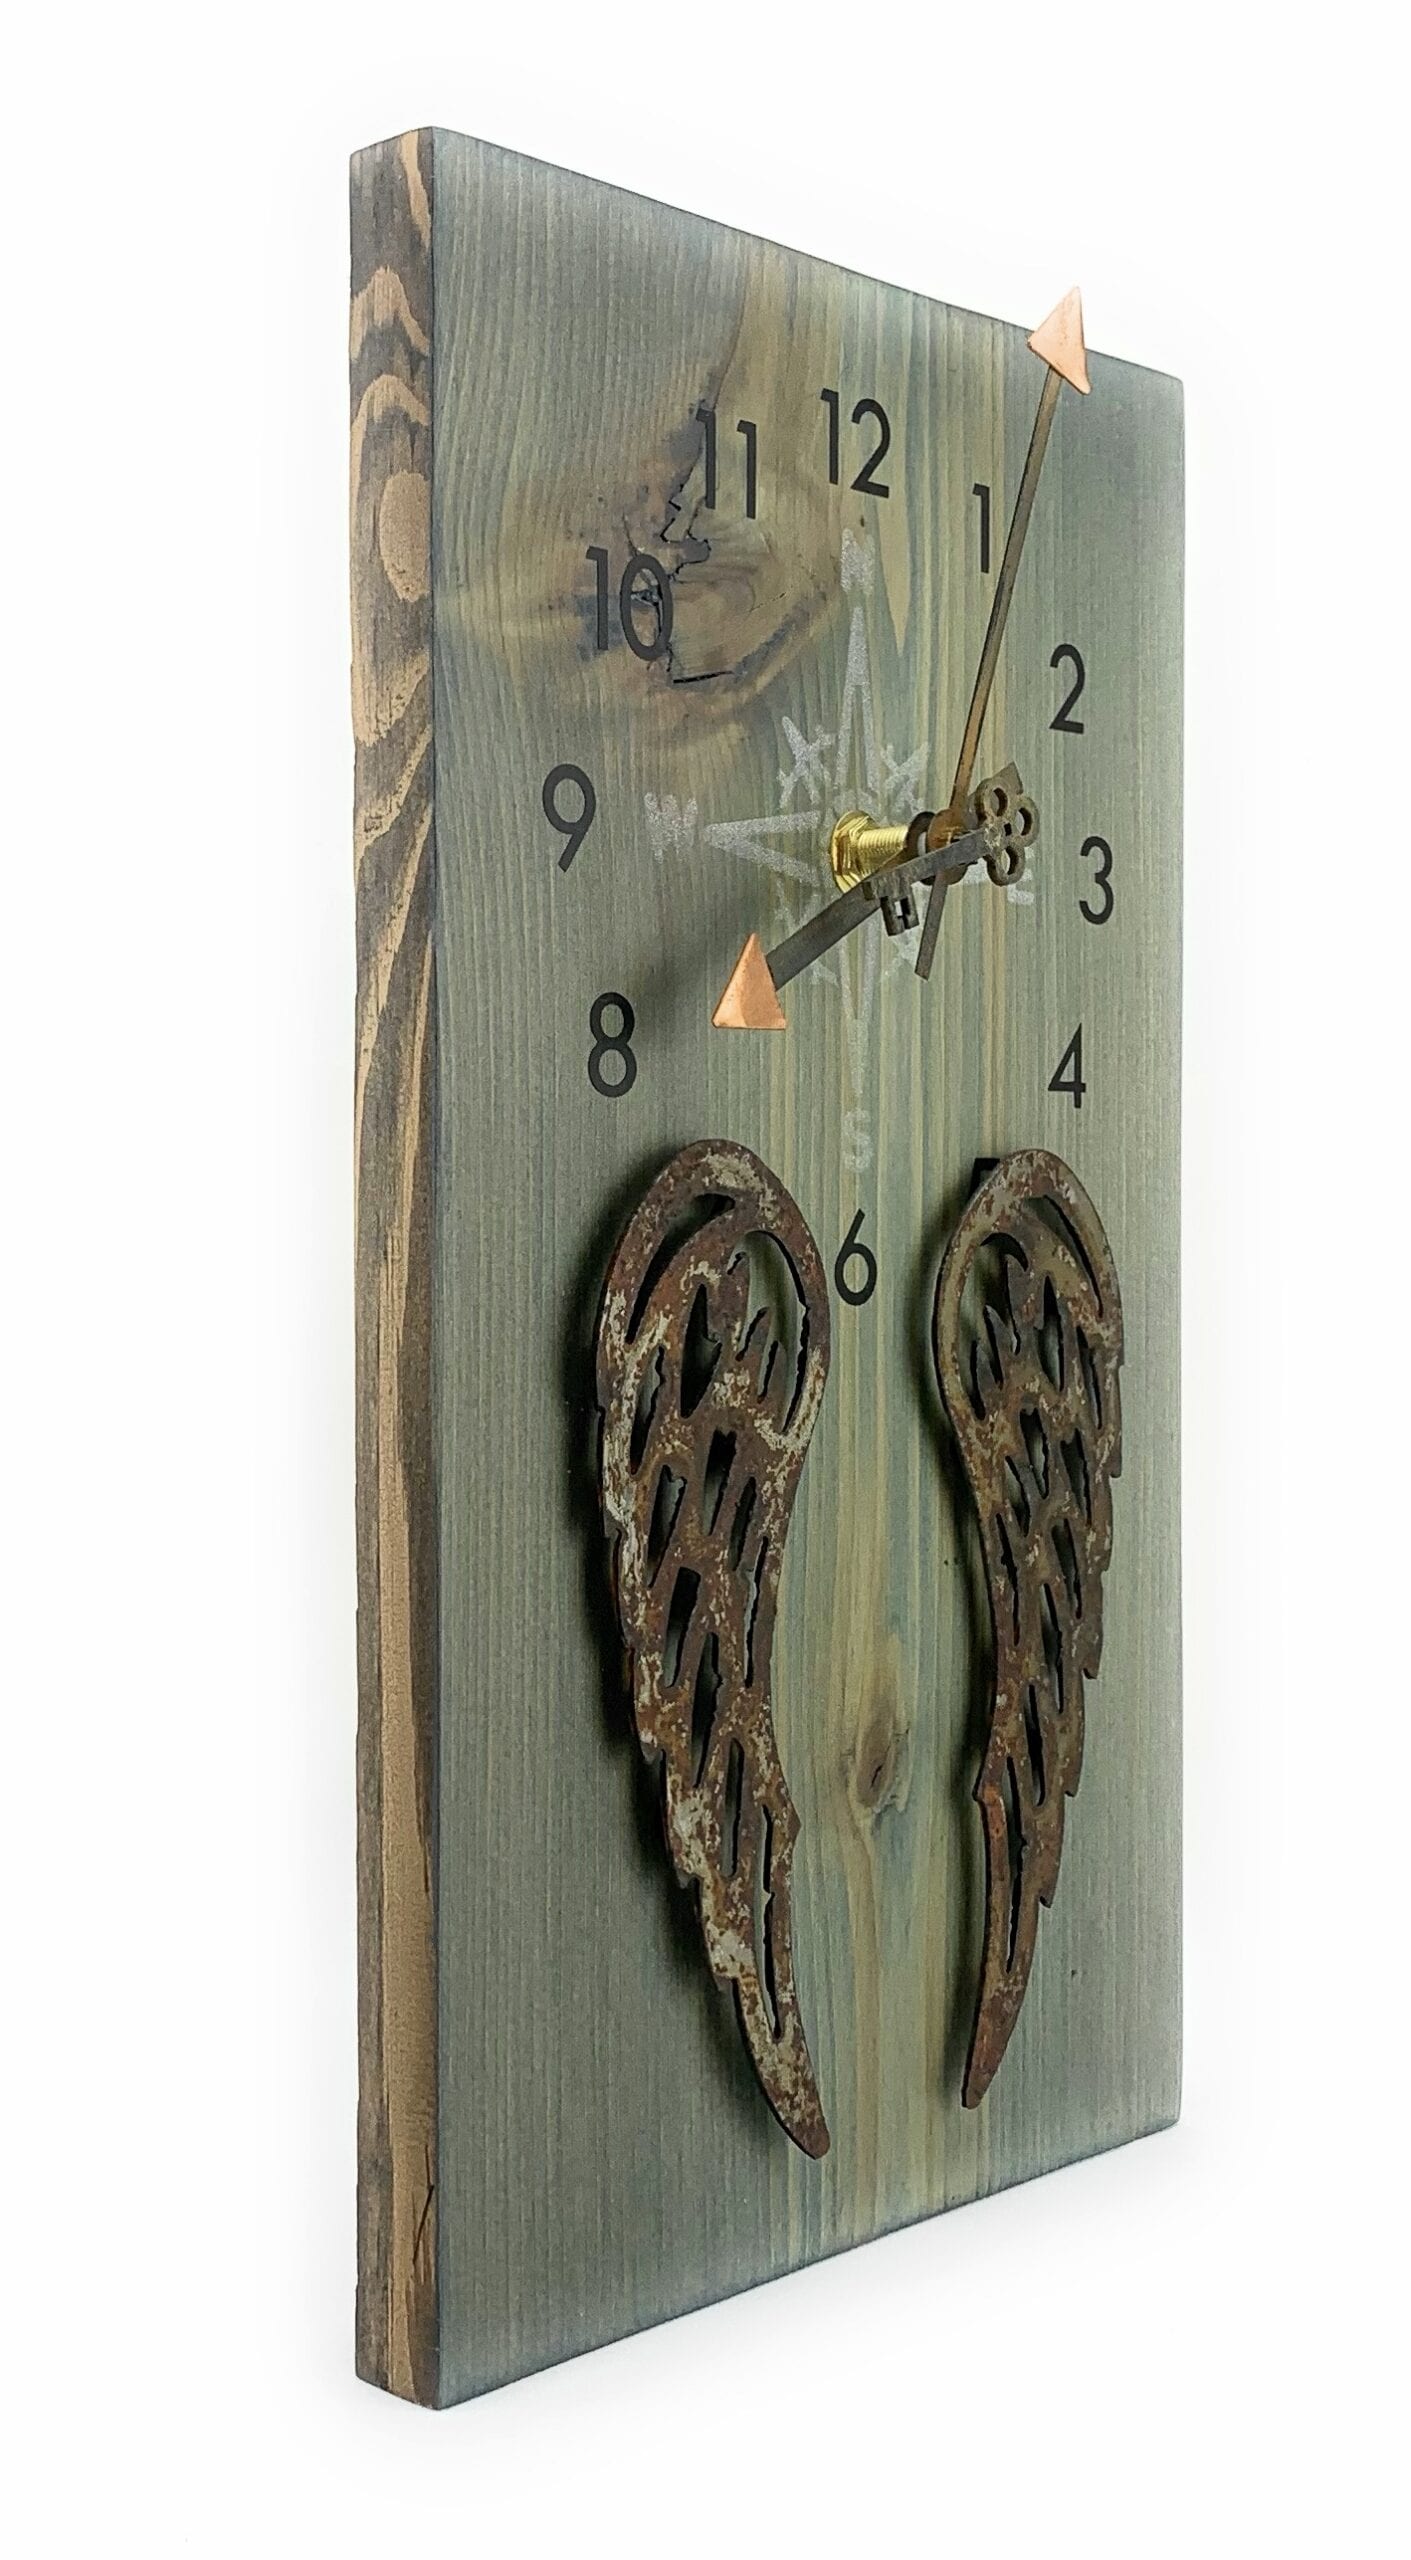 SOLD - KingWood Wood & Metal Wall Clock "The Key To Angels"